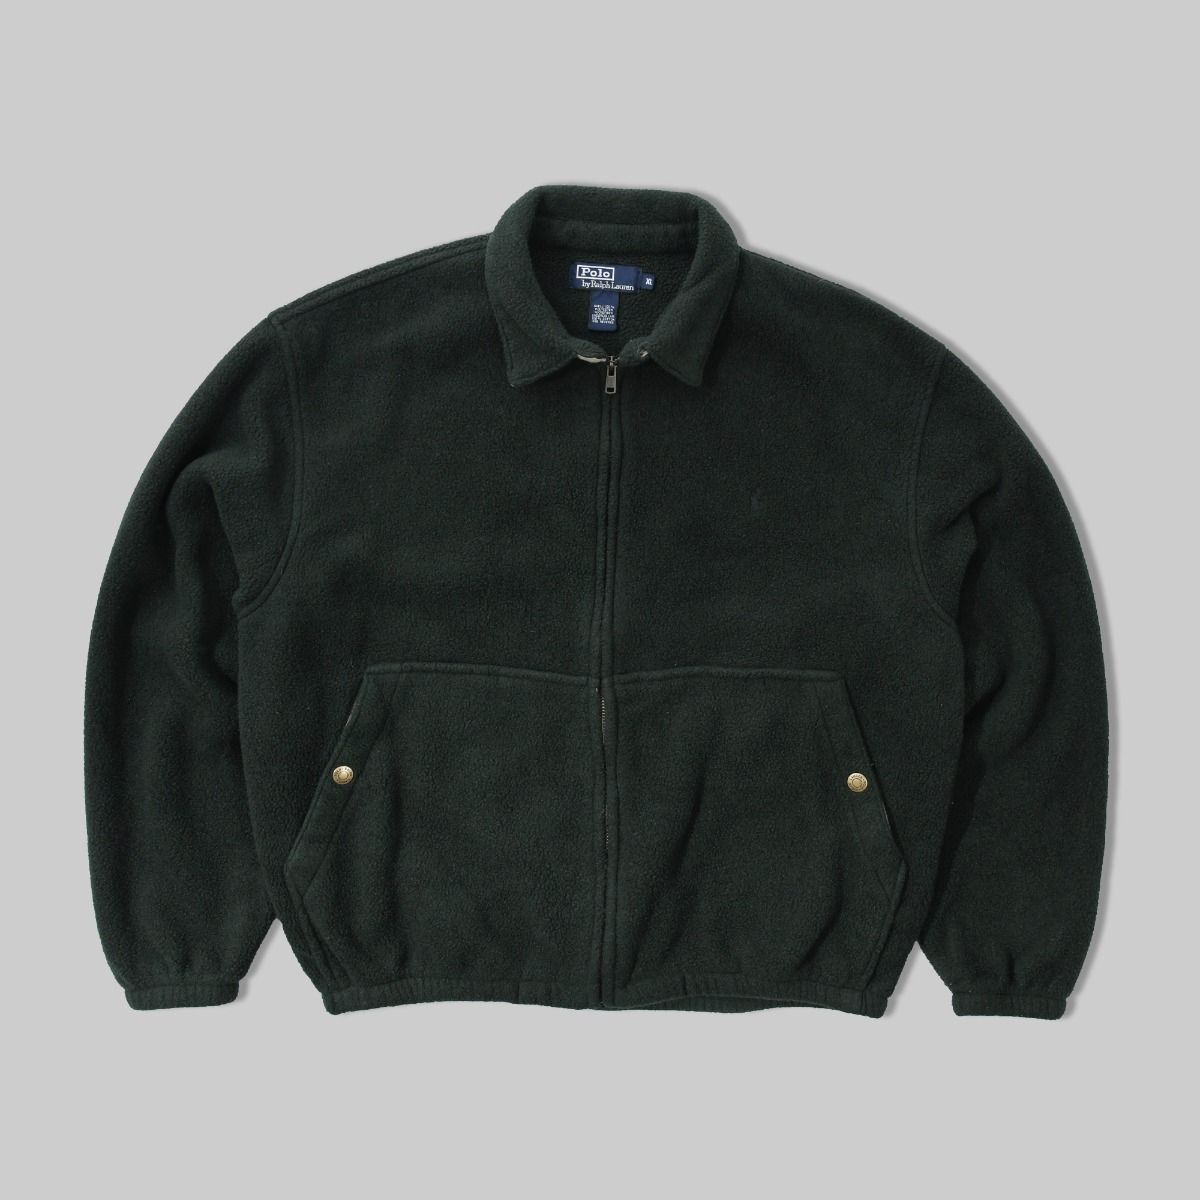 Polo Ralph Lauren 1990s Fleece Harrington Green Jacket